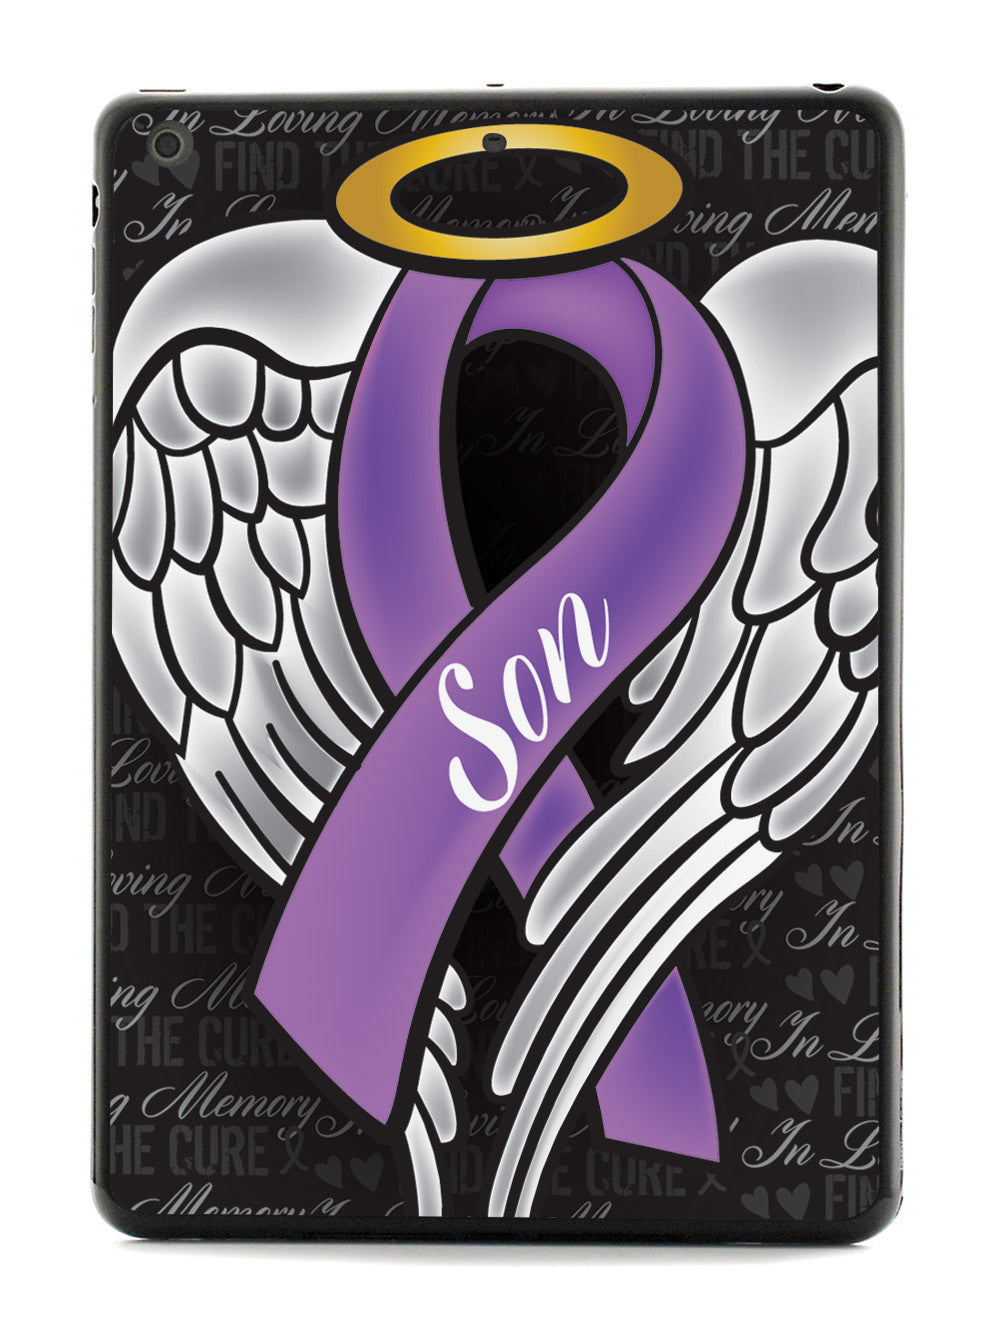 In Loving Memory of My Son - Purple Ribbon Case